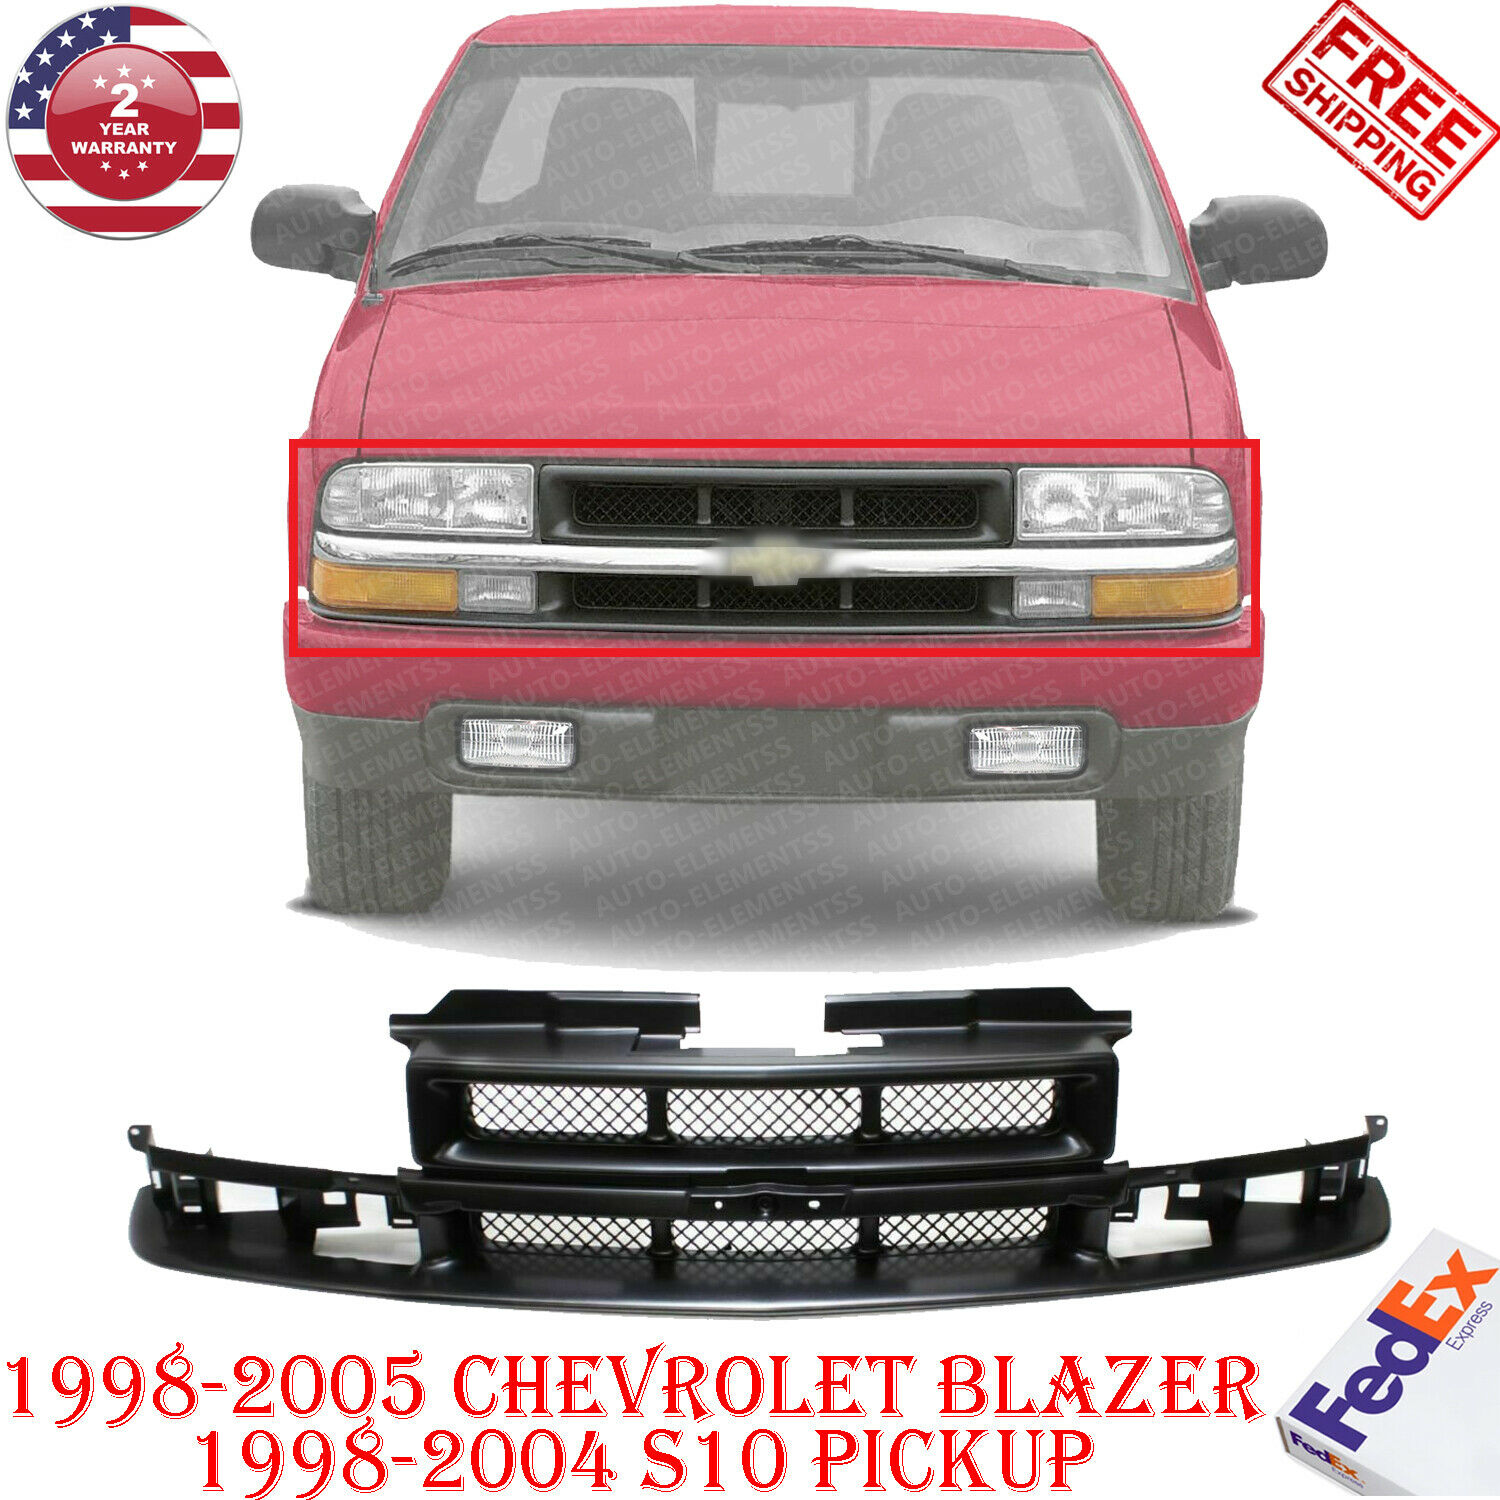 New Grille Assembly Black For 1998-2005 Chevy Blazer / 1998-2004 S10 Pickup  | eBay